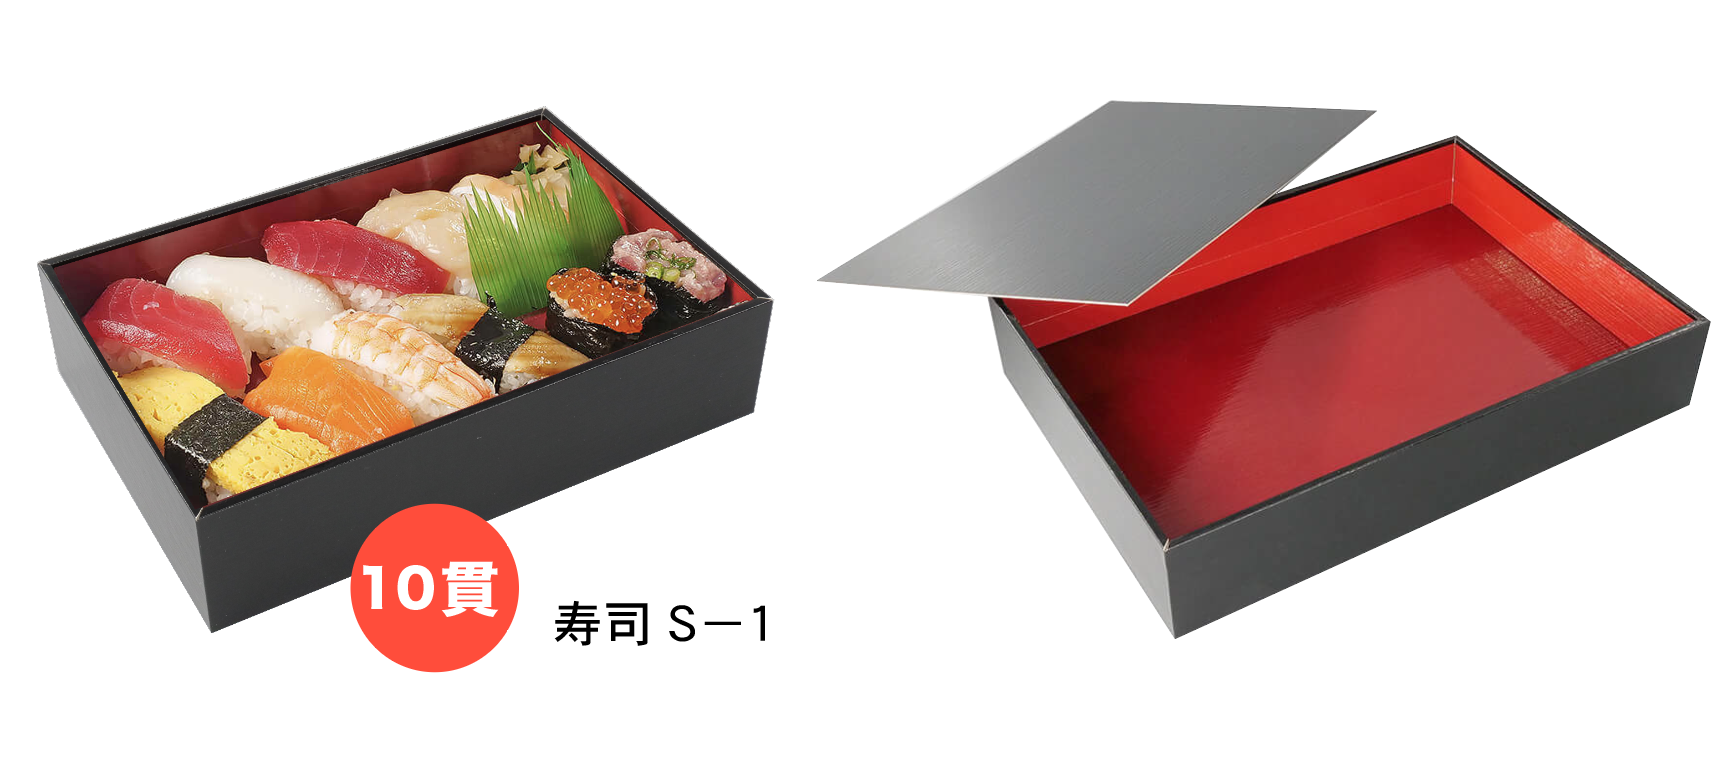 紙の高級寿司容器